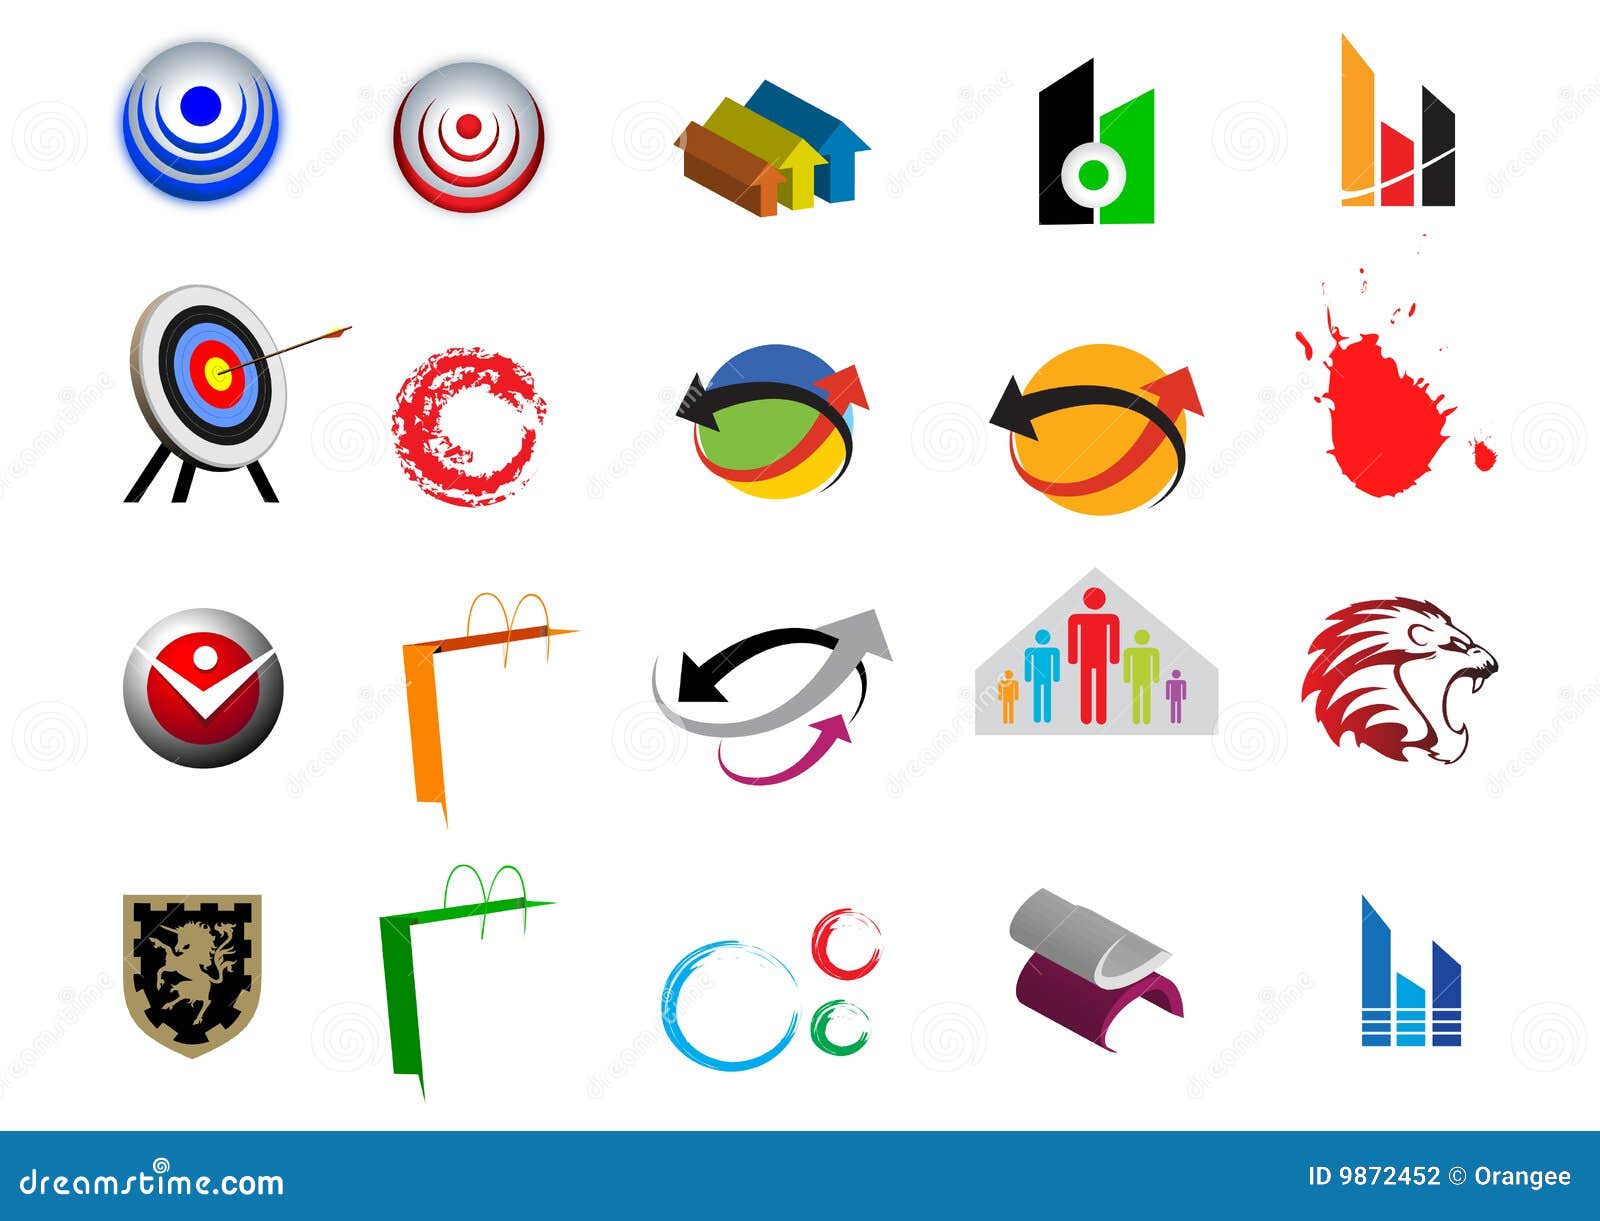 illustrated company logos